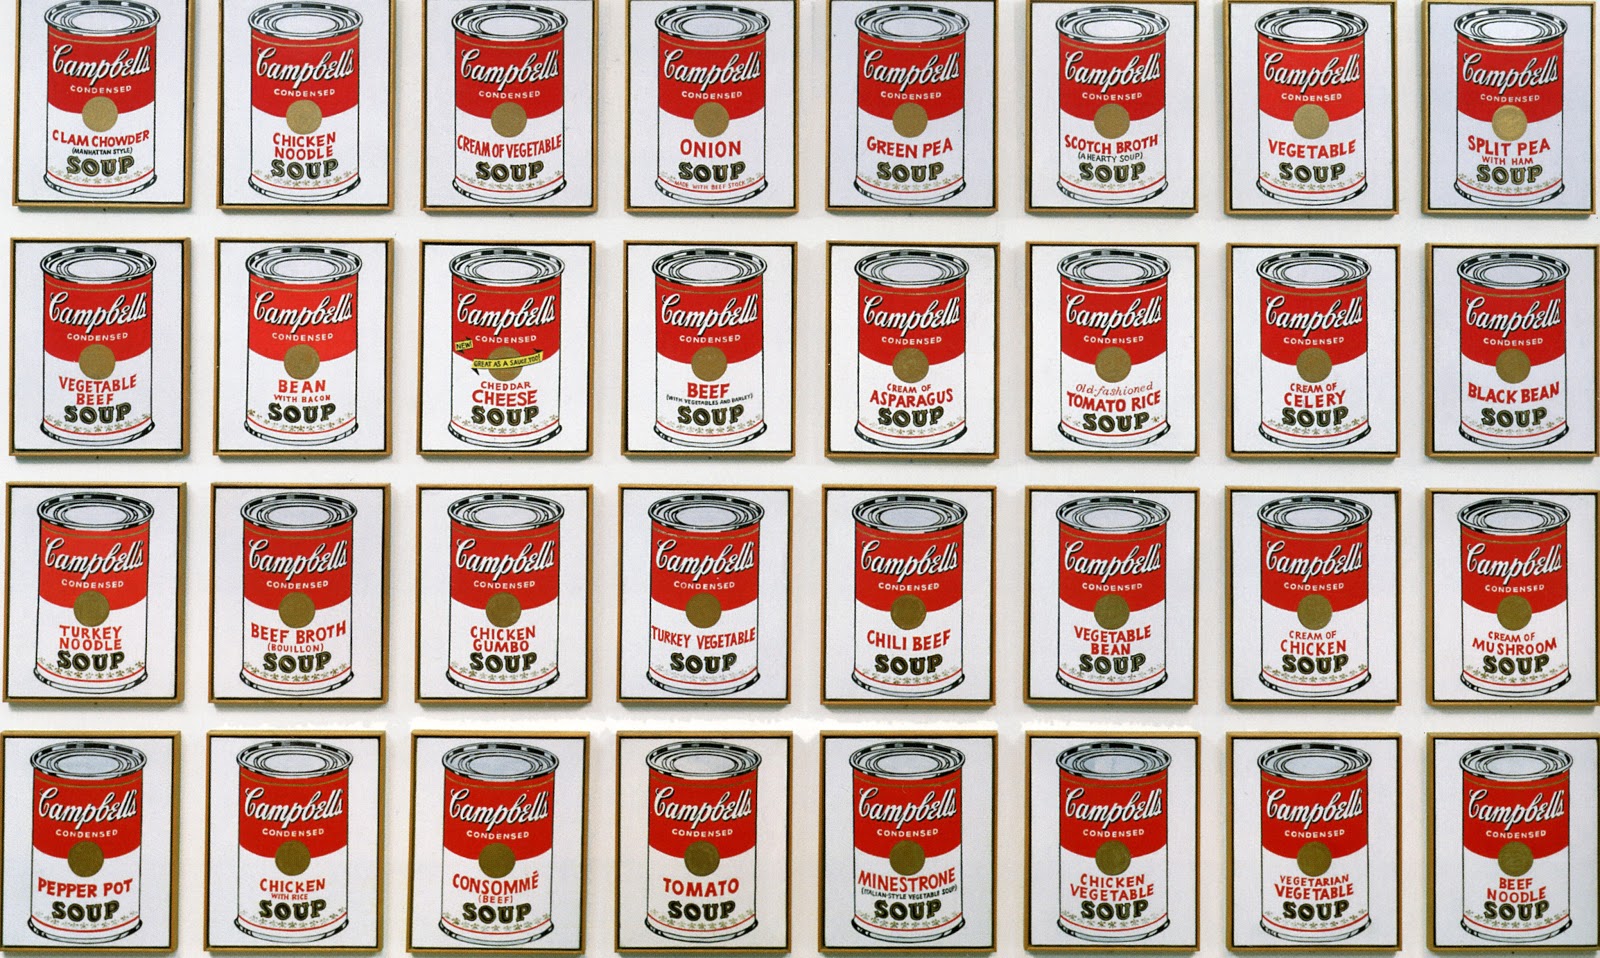 Andy+Warhol-1928-1987 (21).jpg